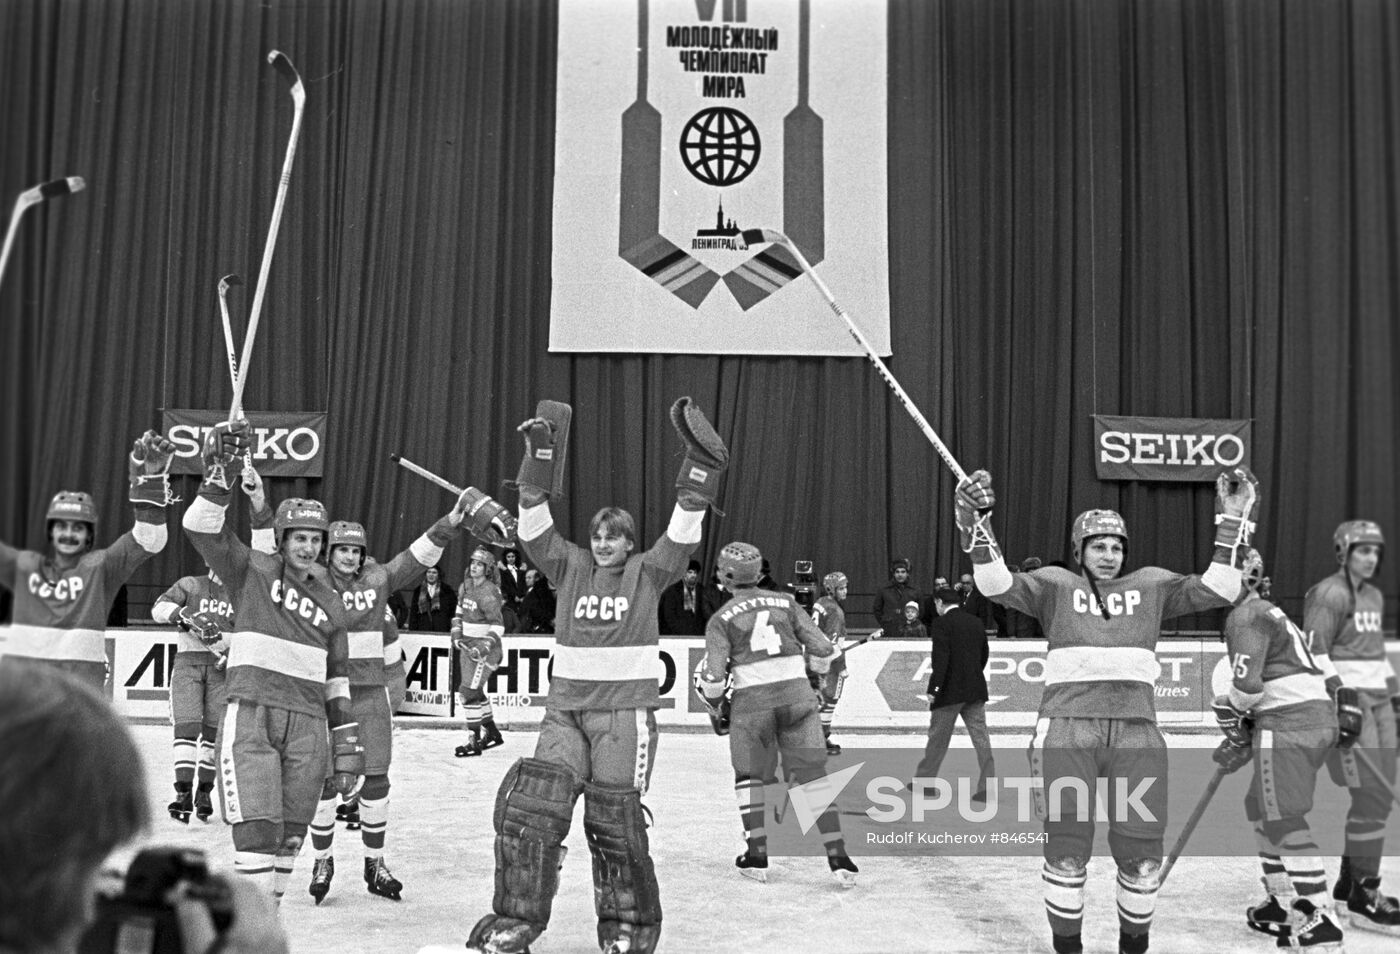 VII World Junior Ice Hockey Championship